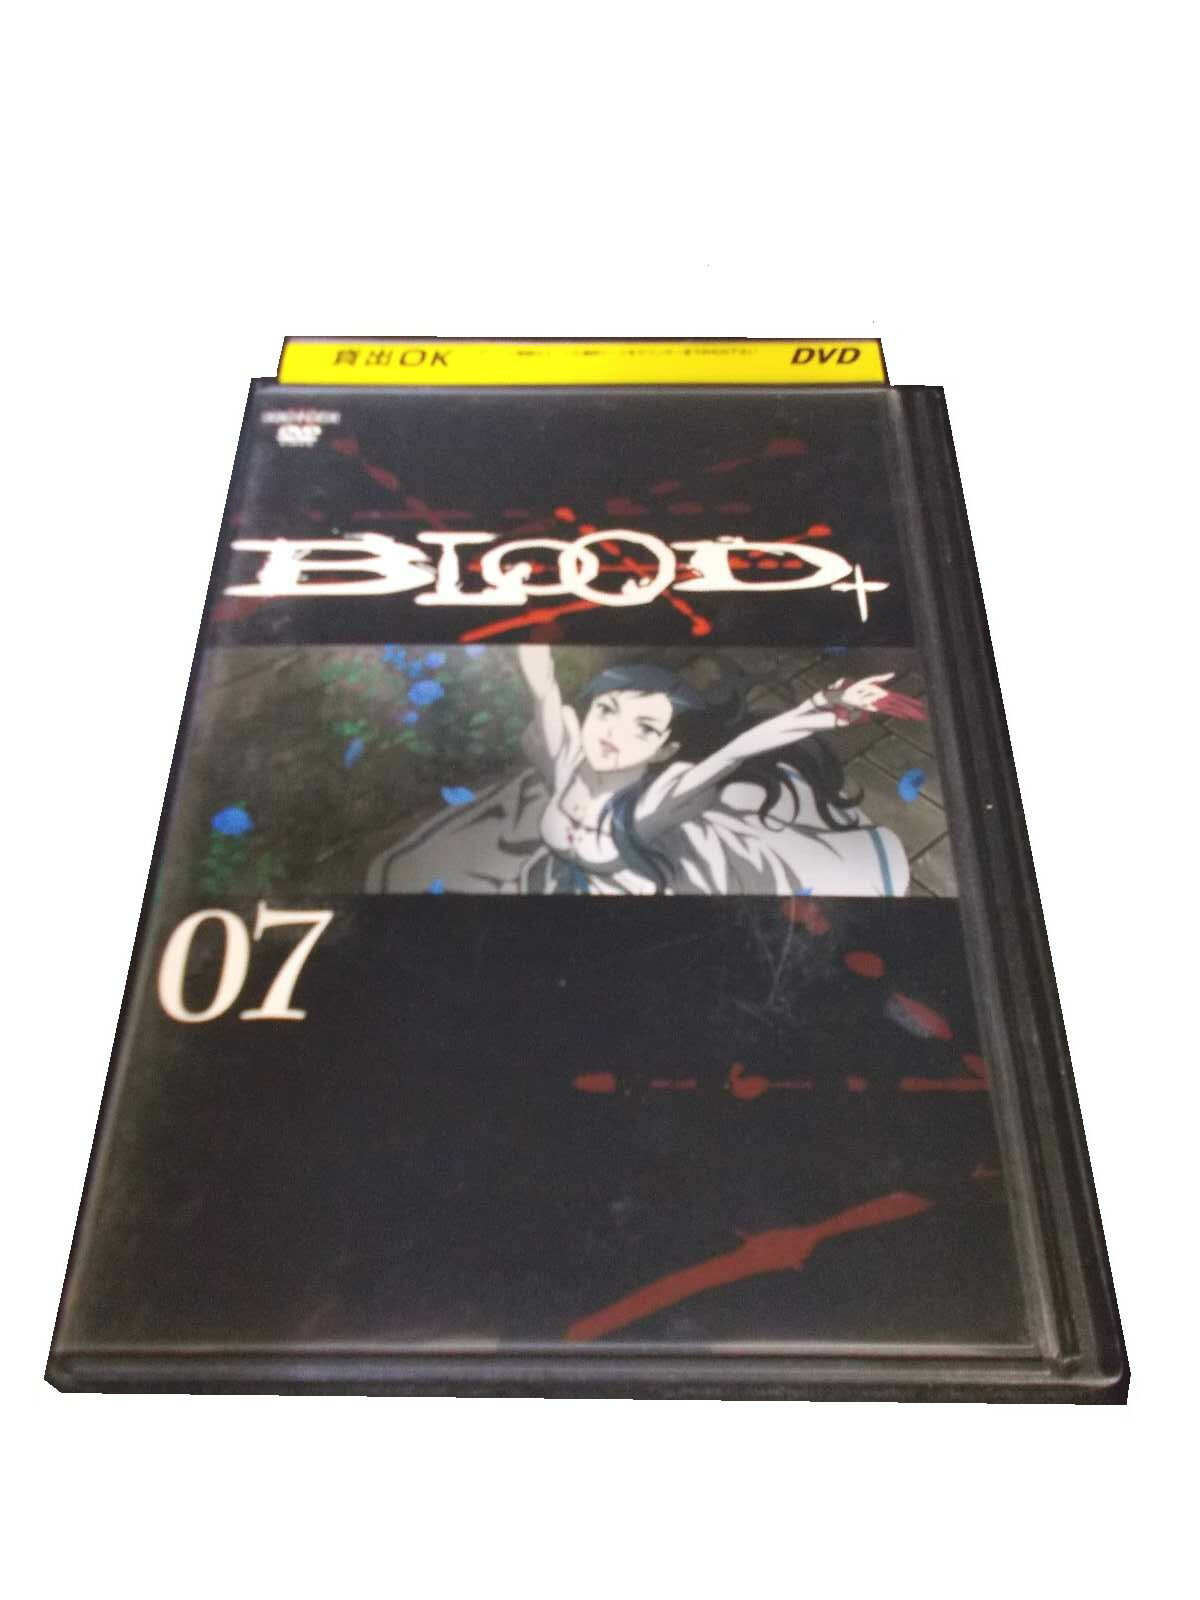 AD00451 【中古】 【DVD】 BLOOD+ 07